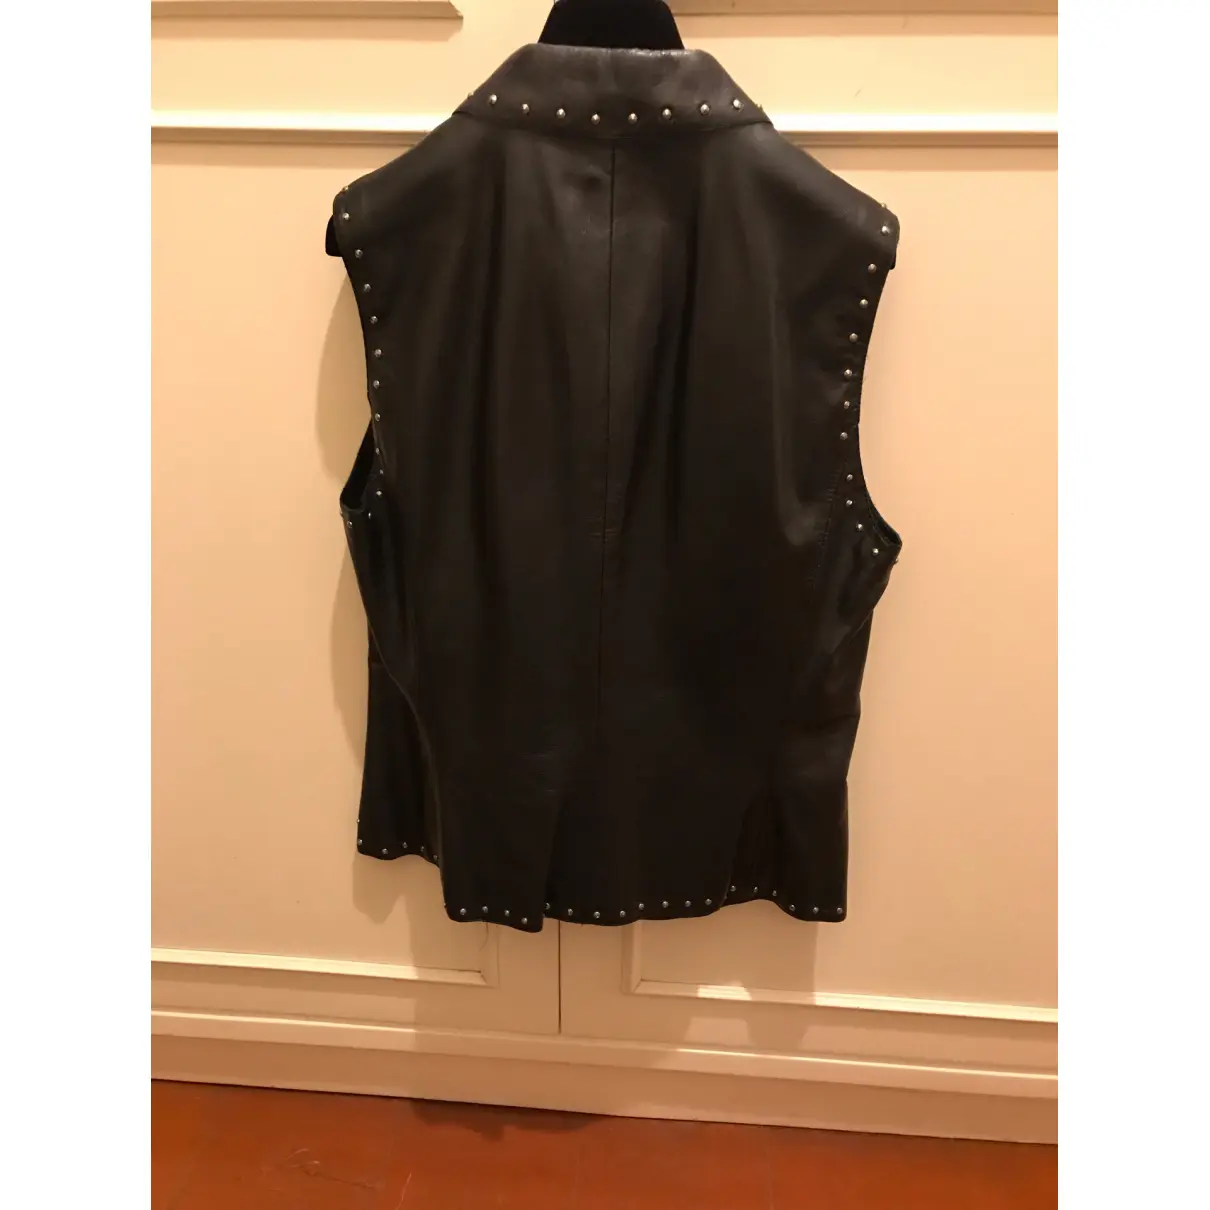 Buy Gilmar Leather jacket online